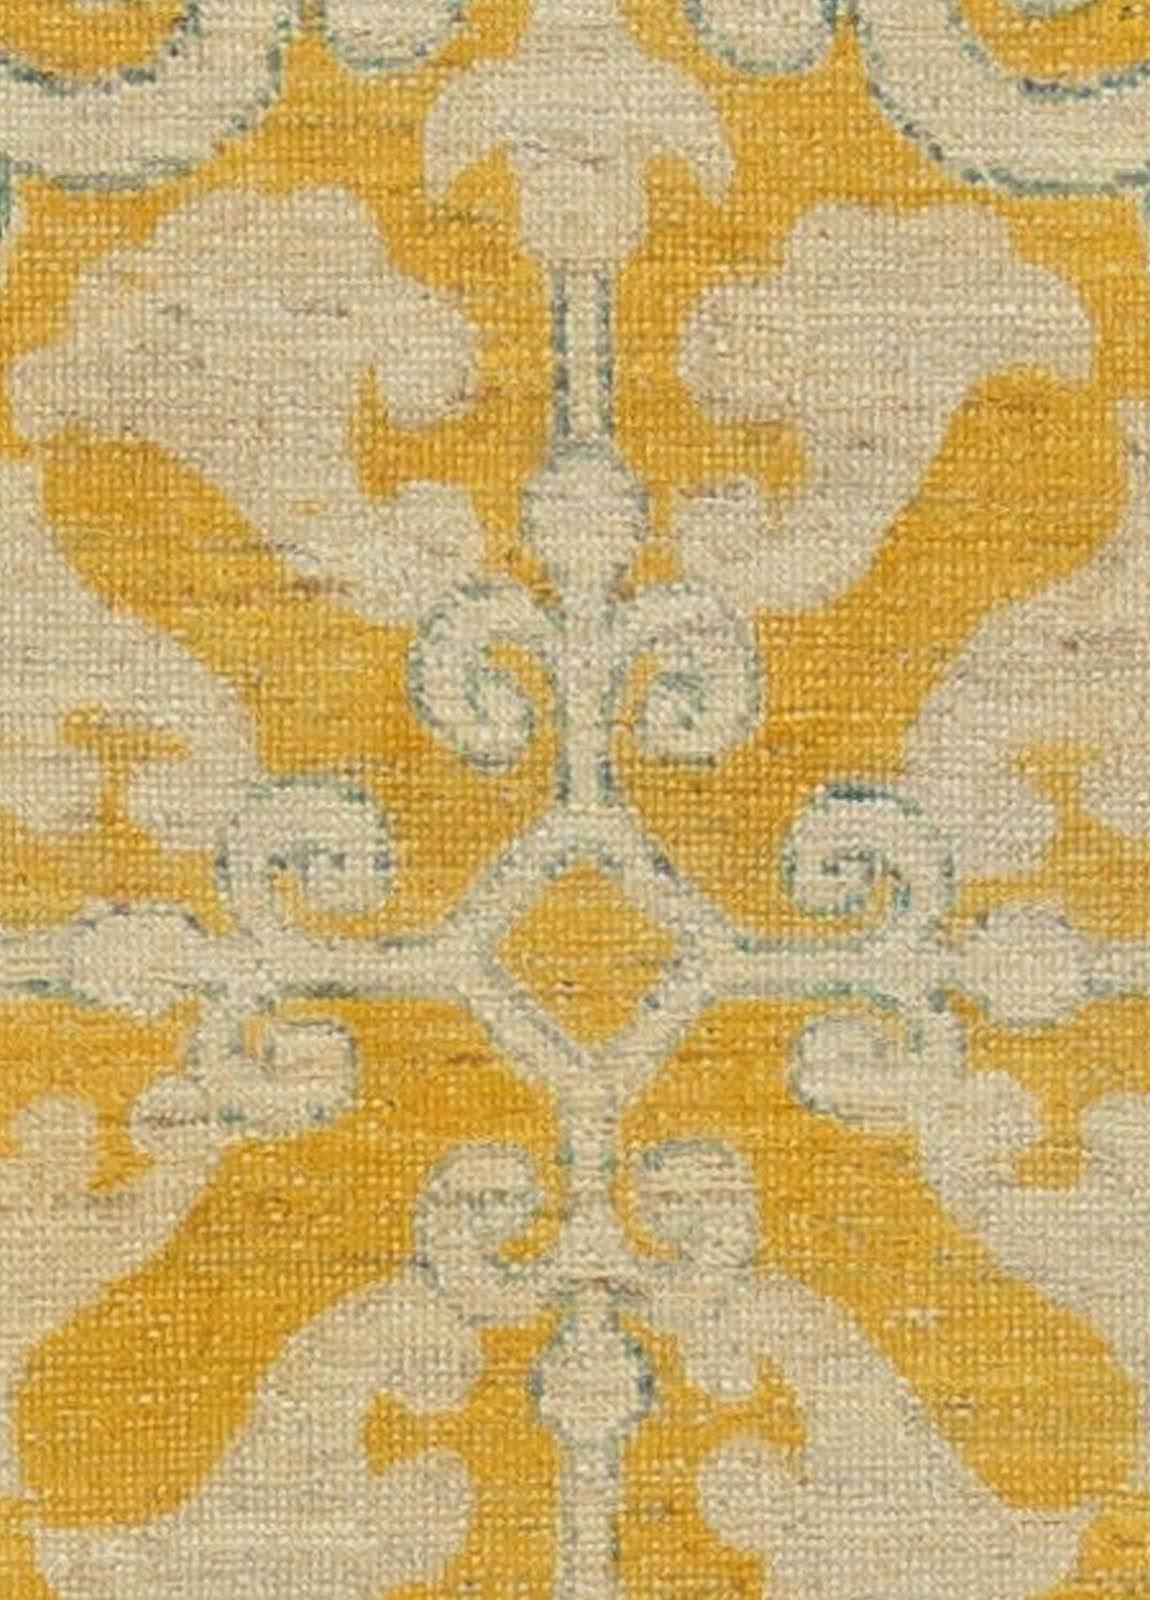 Traditional oriental inspired yellow handmade wool rug by Doris Leslie Blau.
Size: 2'10